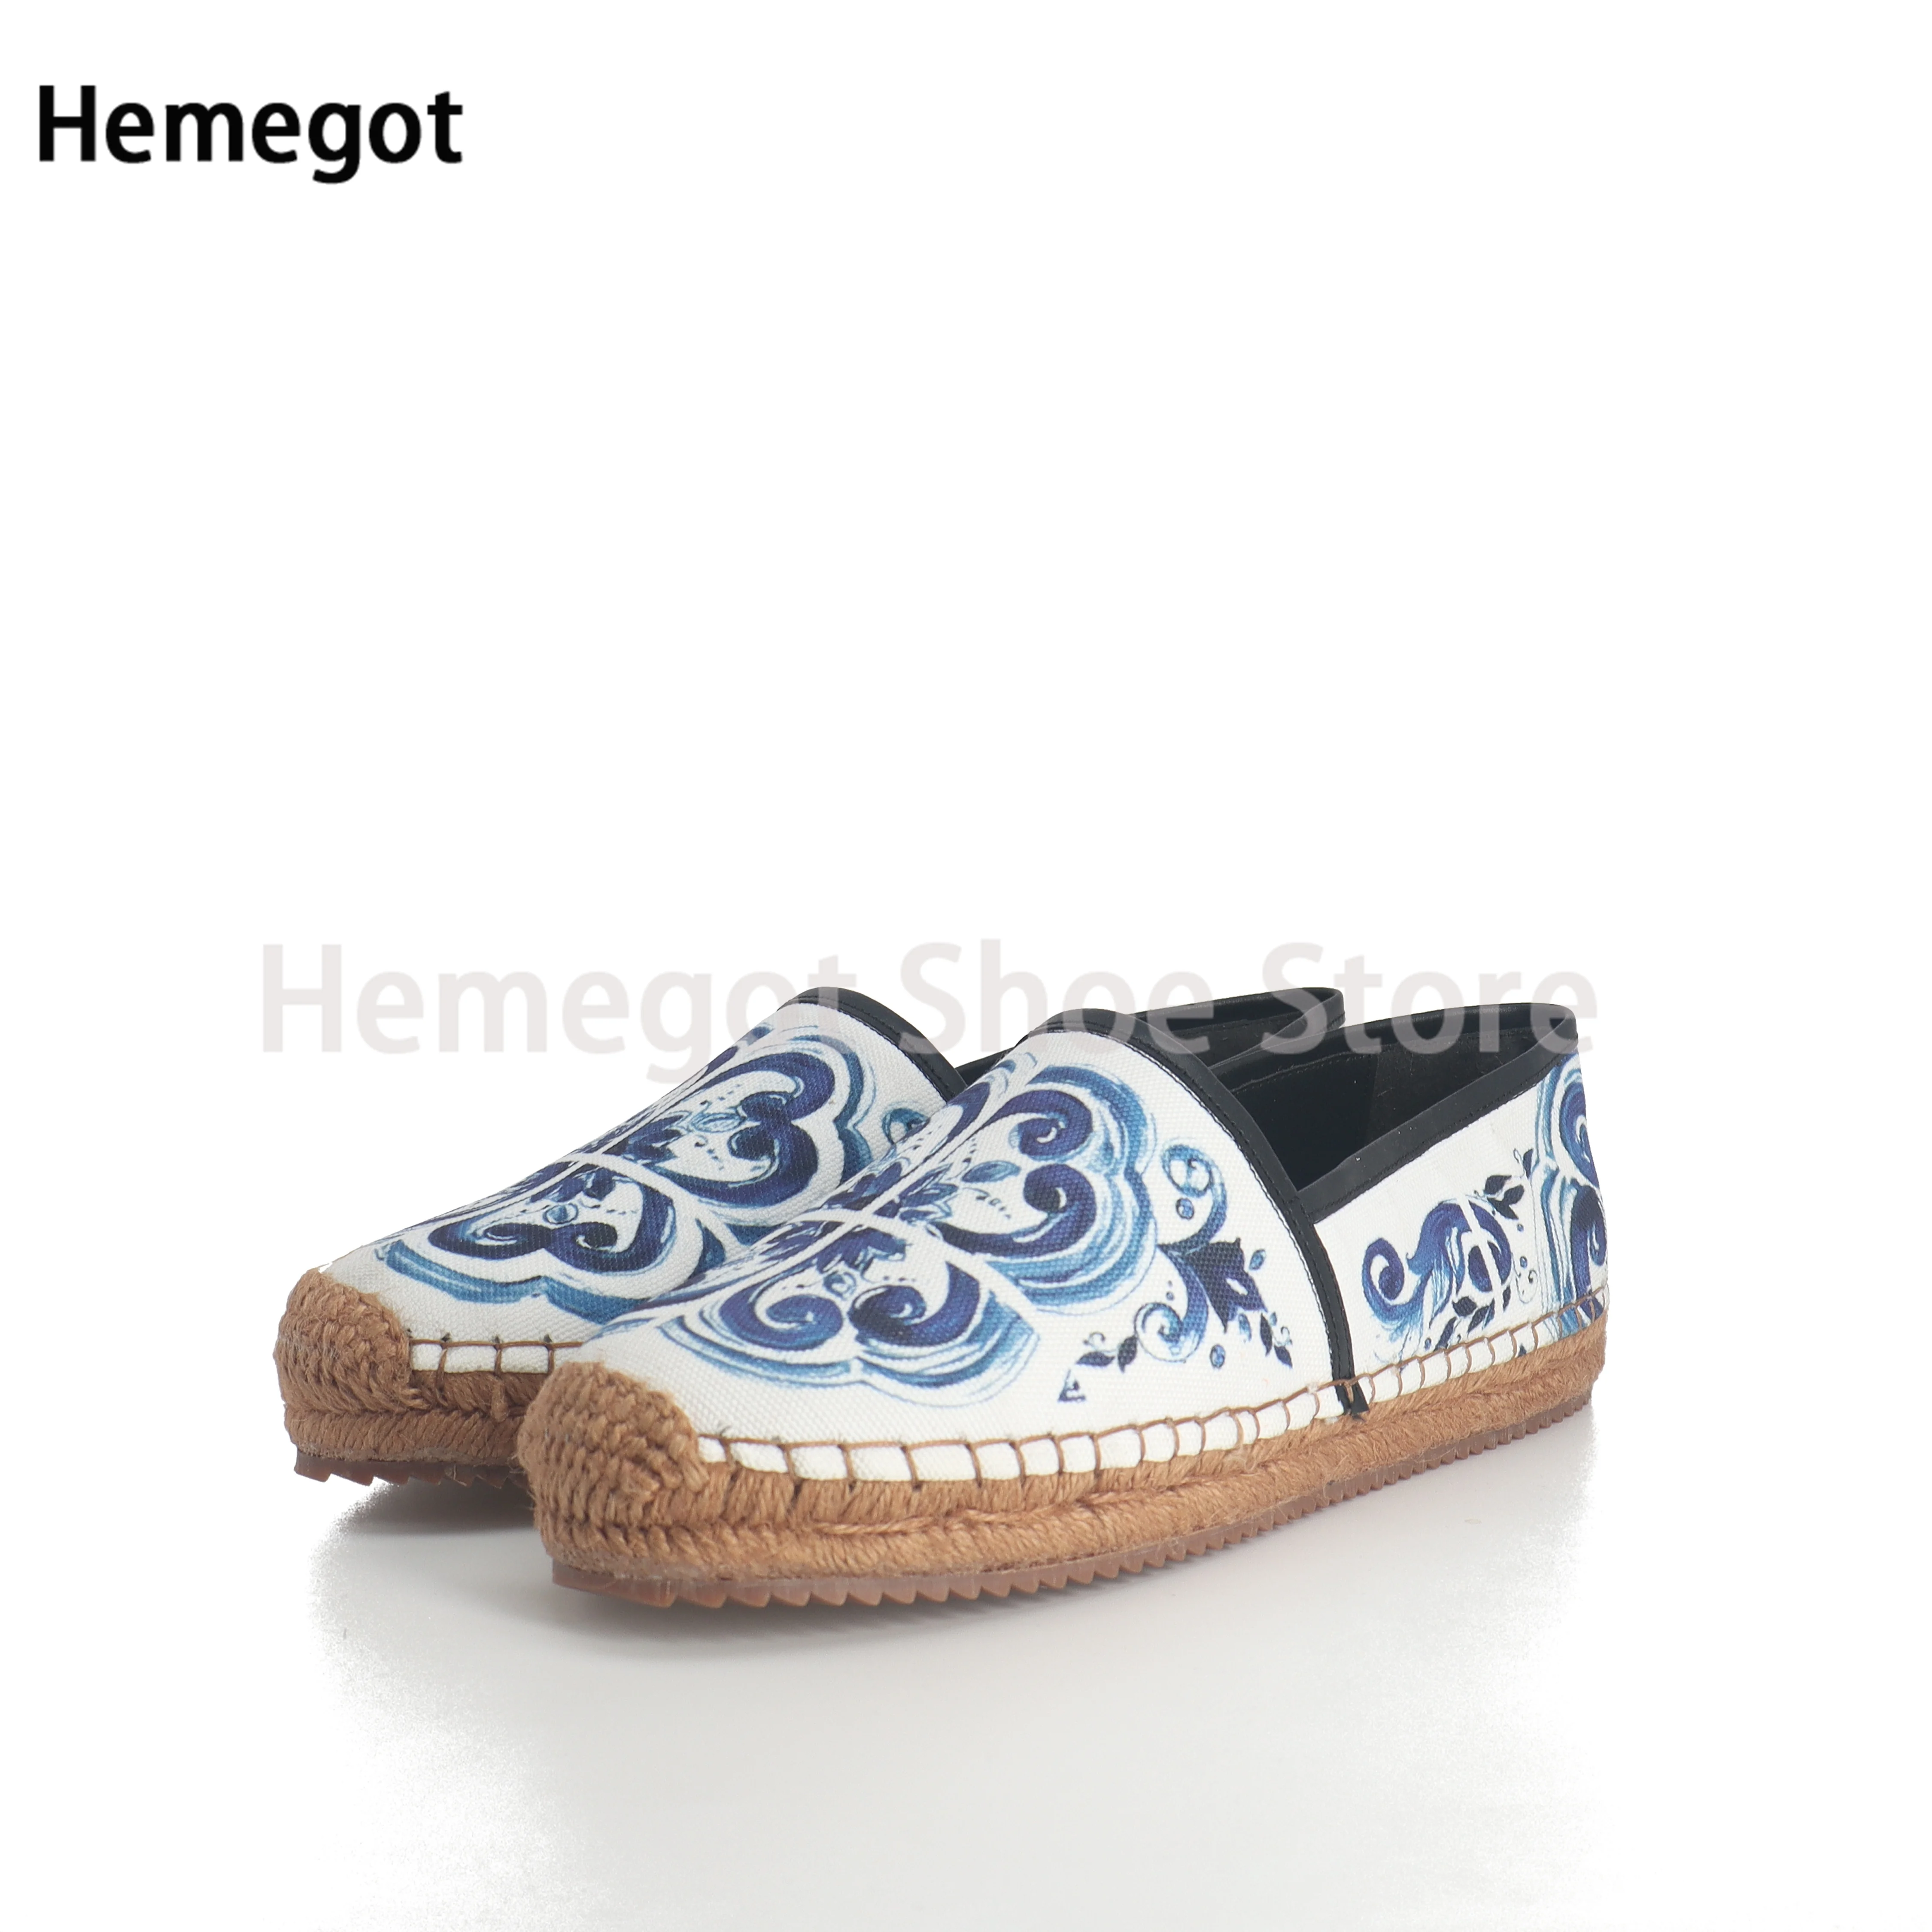 Hemp shoes